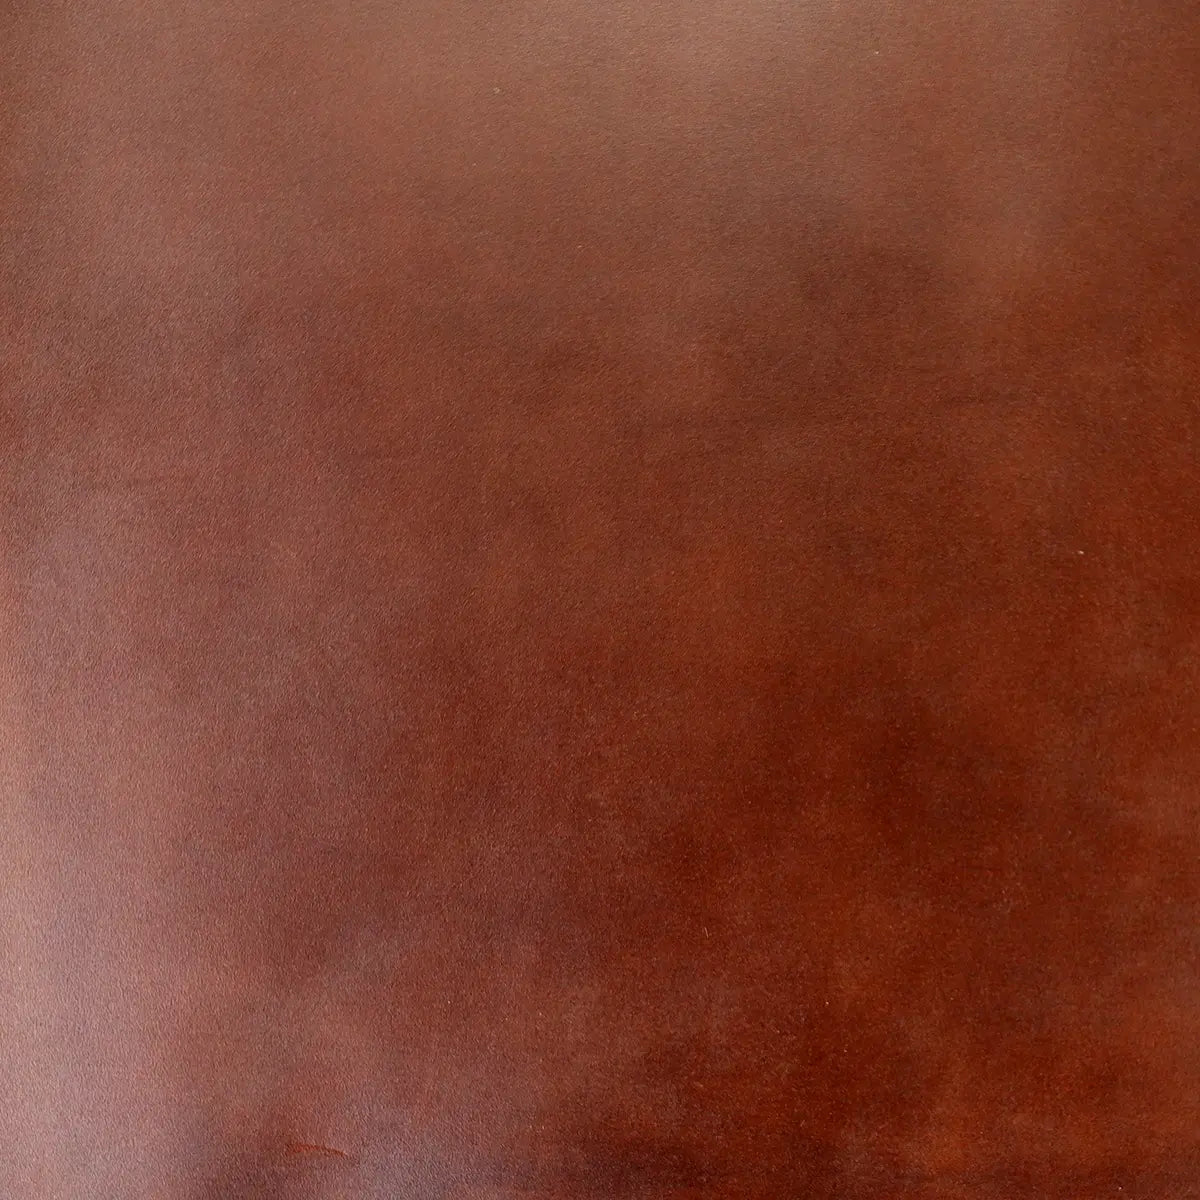 Horween Dublin Type Darker Browns 4-5oz Leather